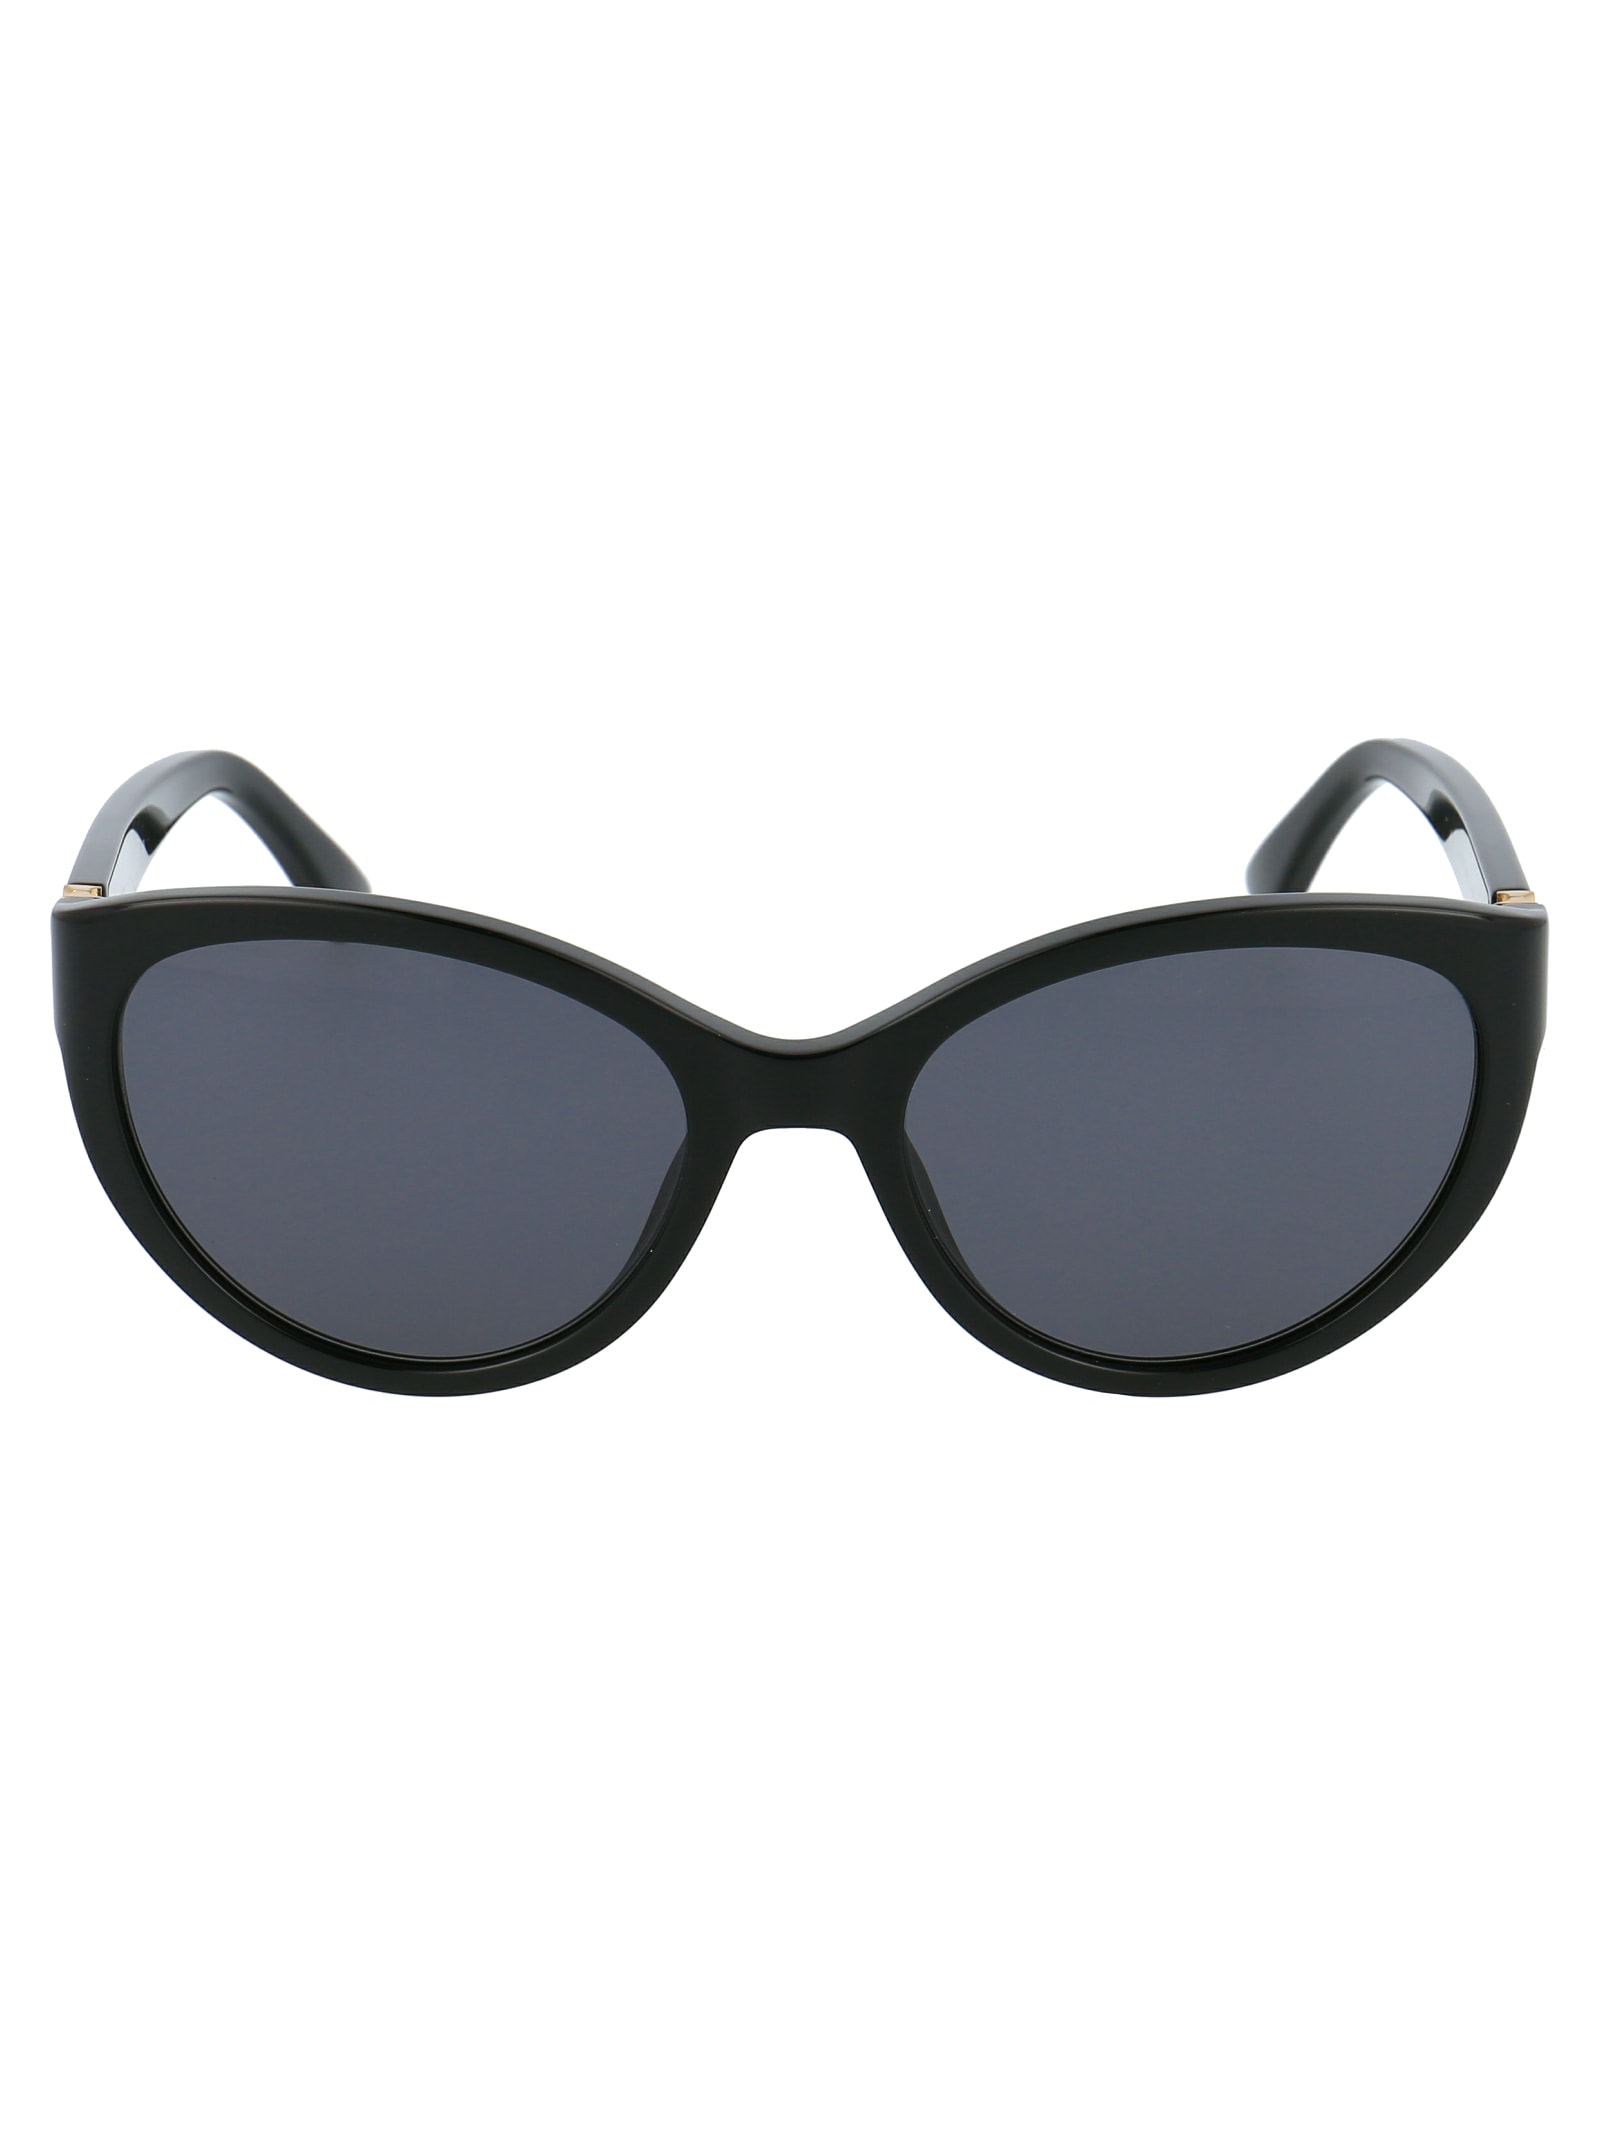 Moschino Mos065/s Sunglasses